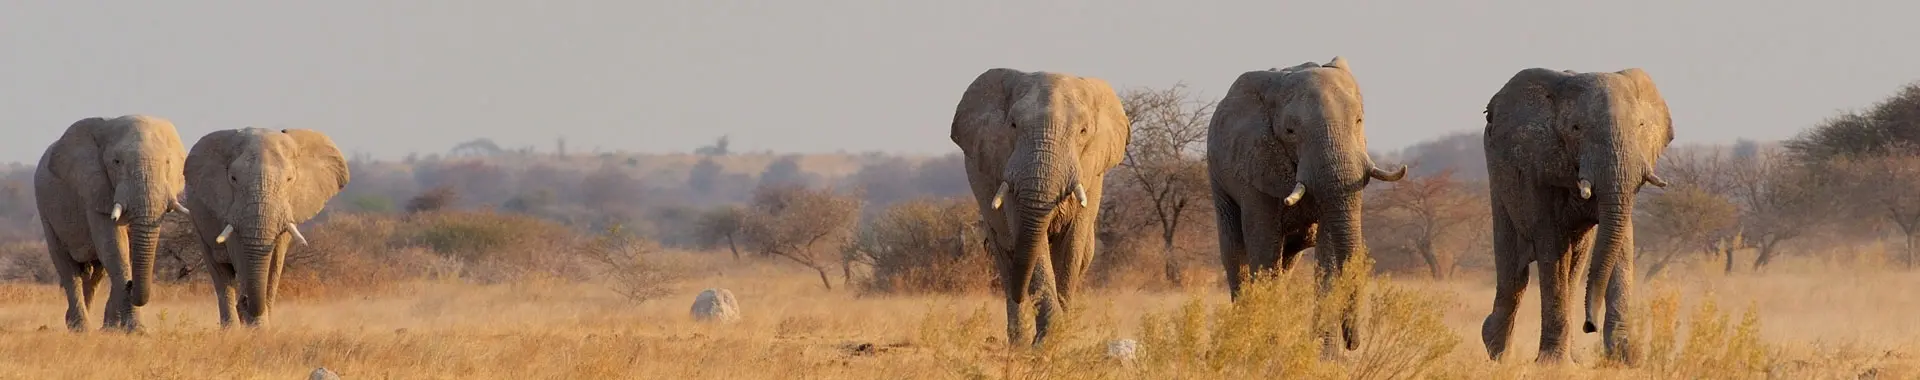 Elefanten safari in Tansania